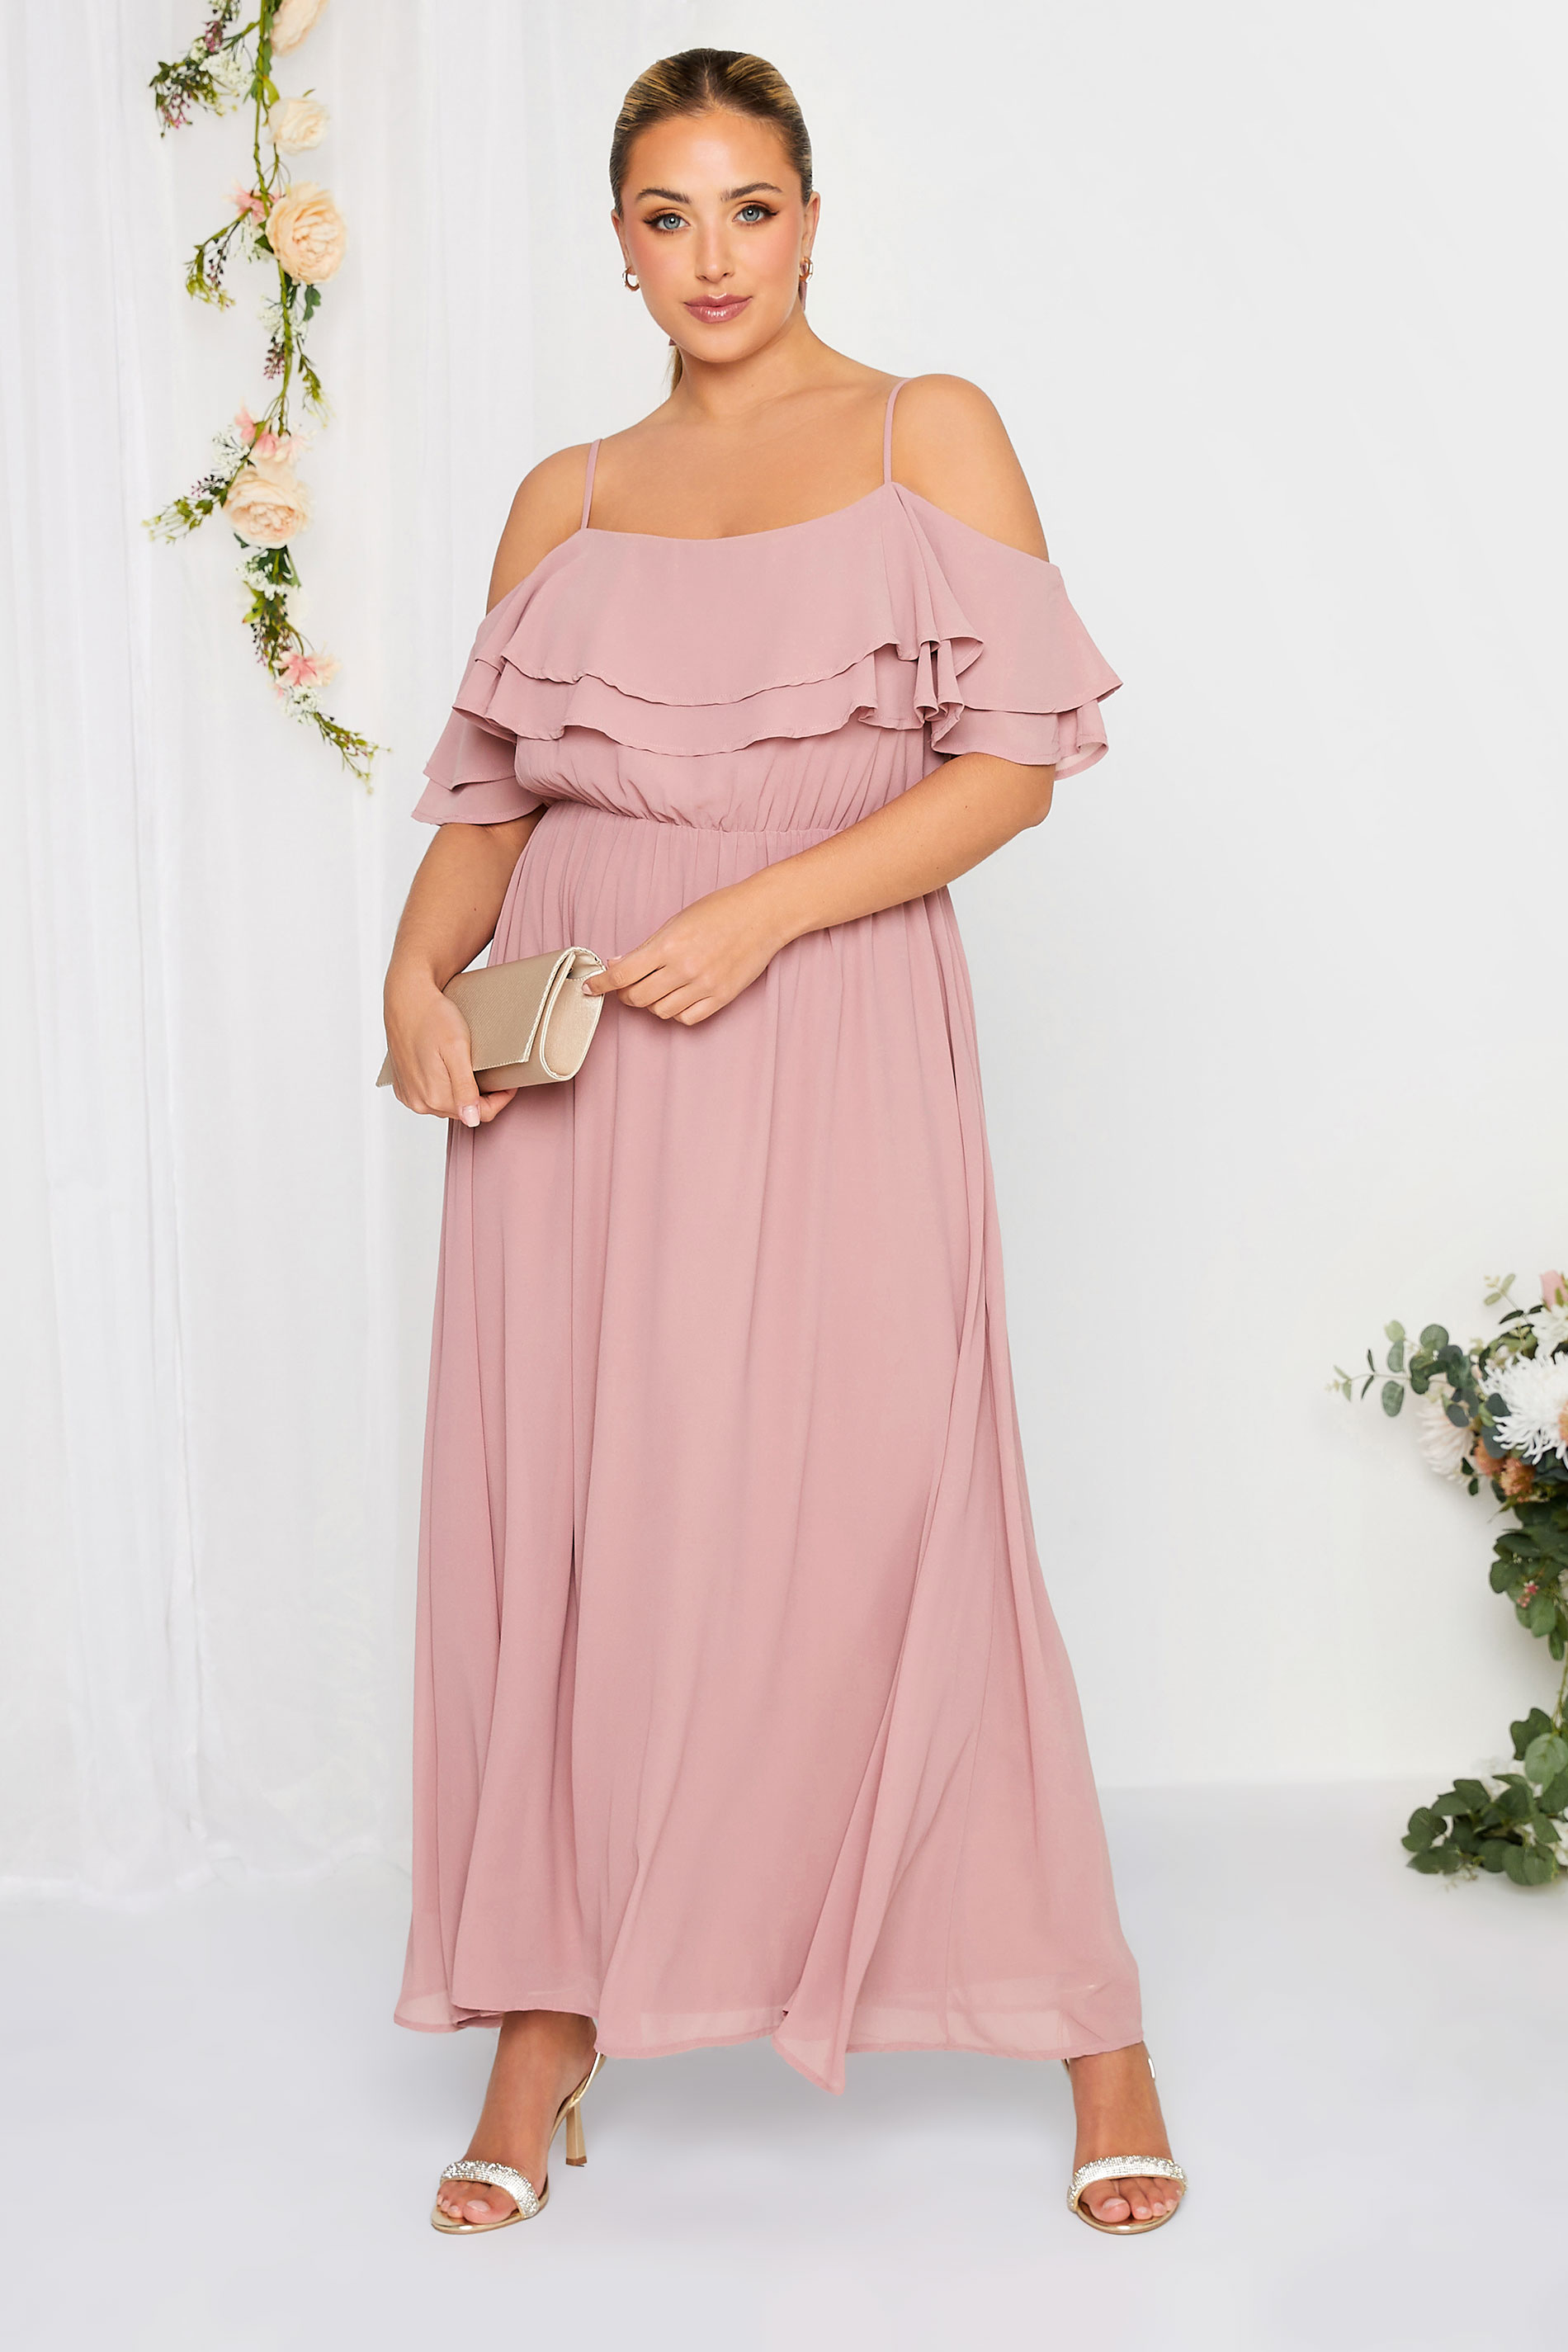 YOURS LONDON Plus Size Pink Bardot Ruffle Maxi Dress | Yours Clothing 1